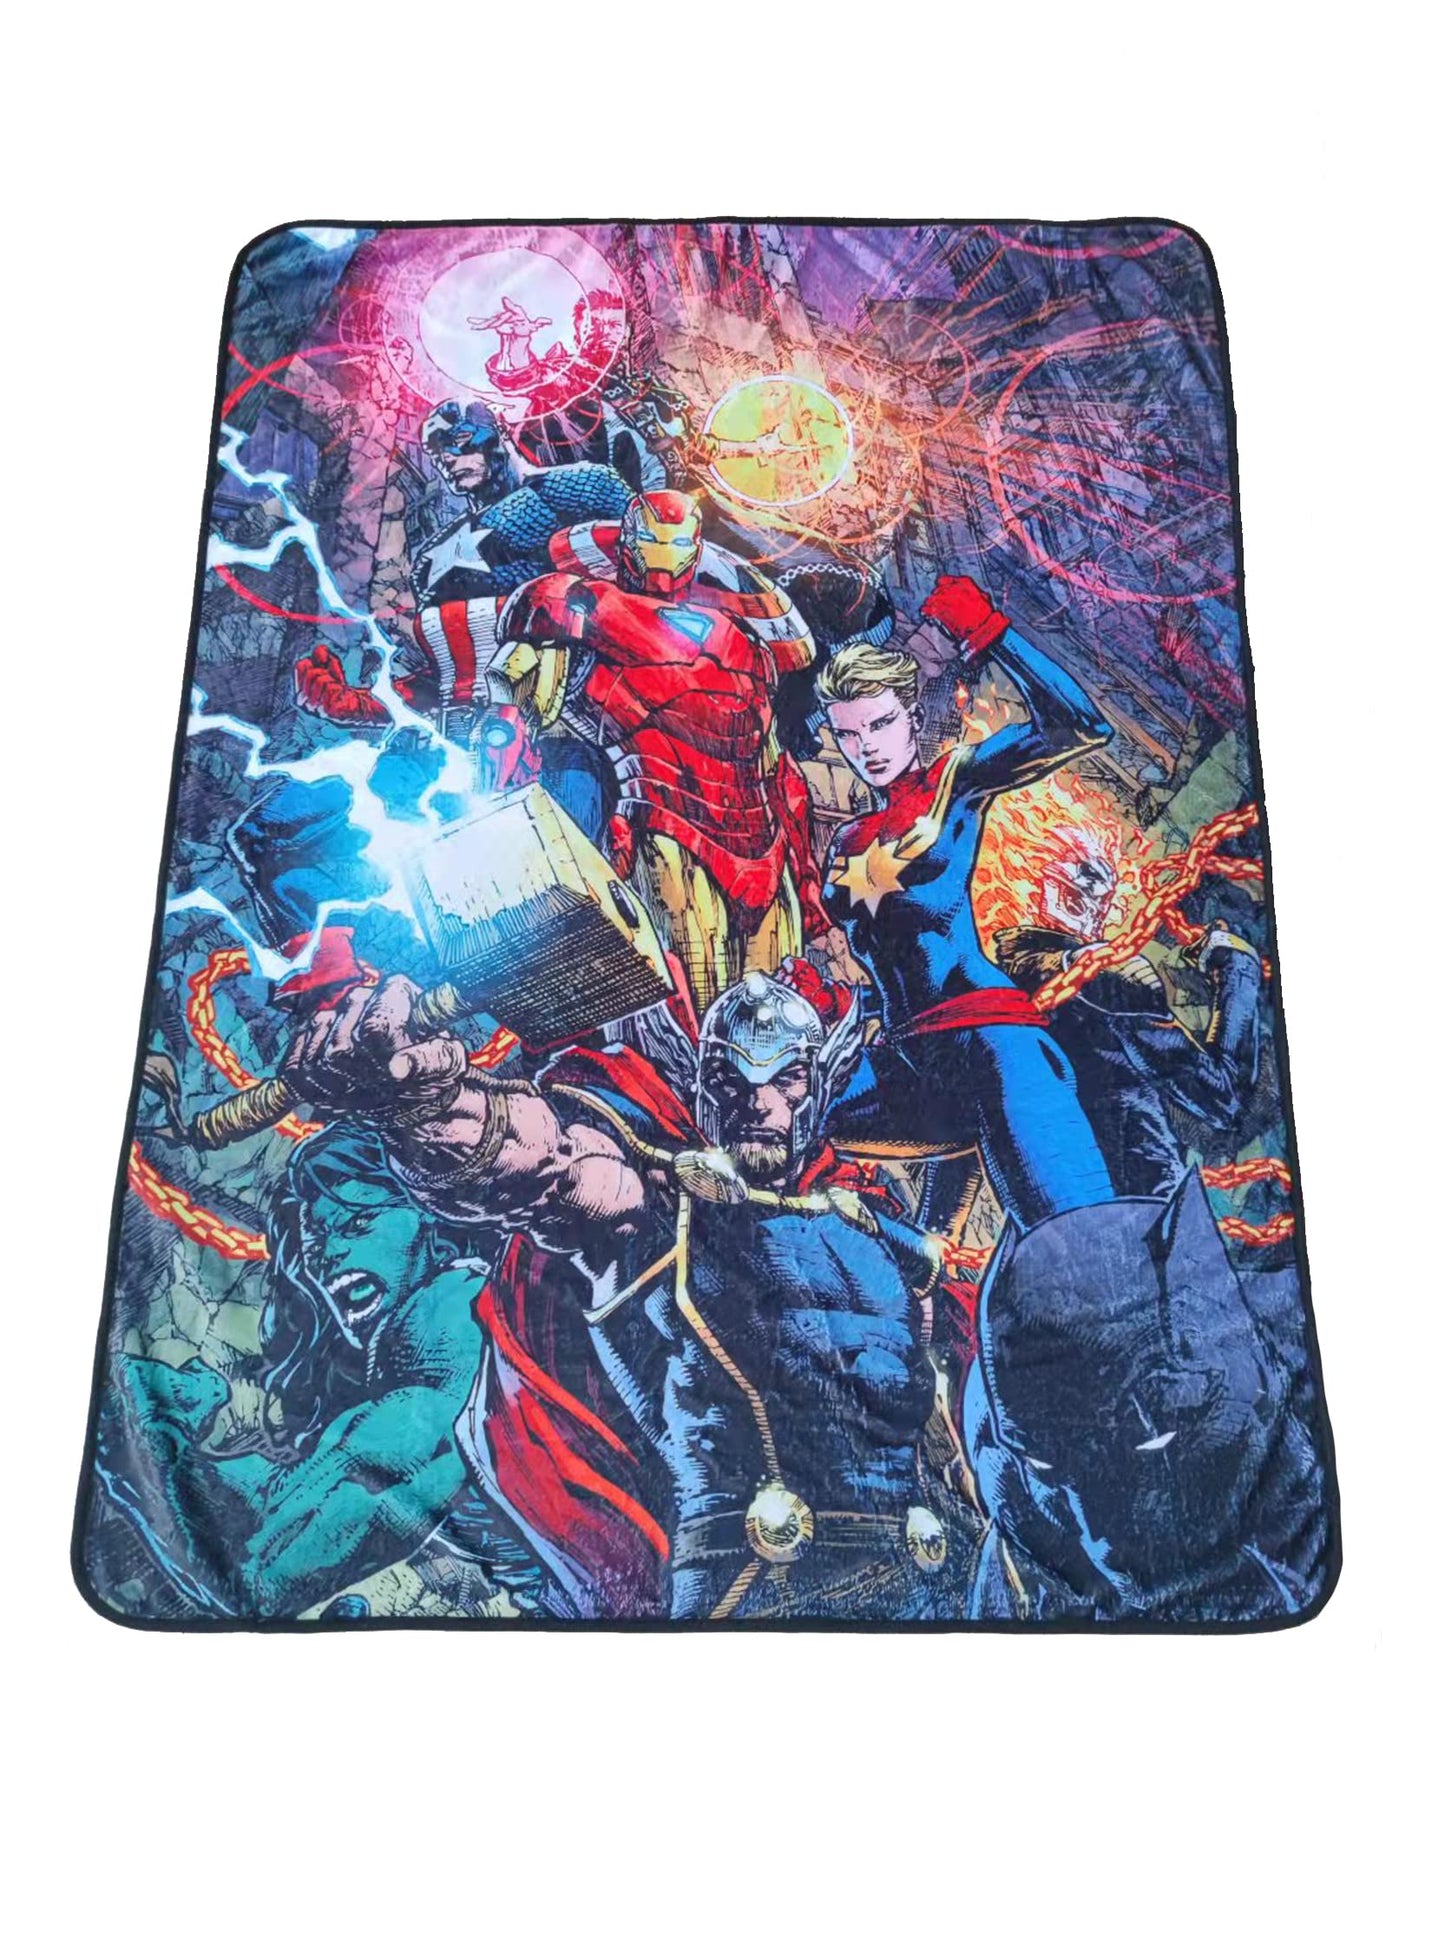 Marvel Avengers Fleece Softest Throw Blanket| Measures 60 x 45 Inches